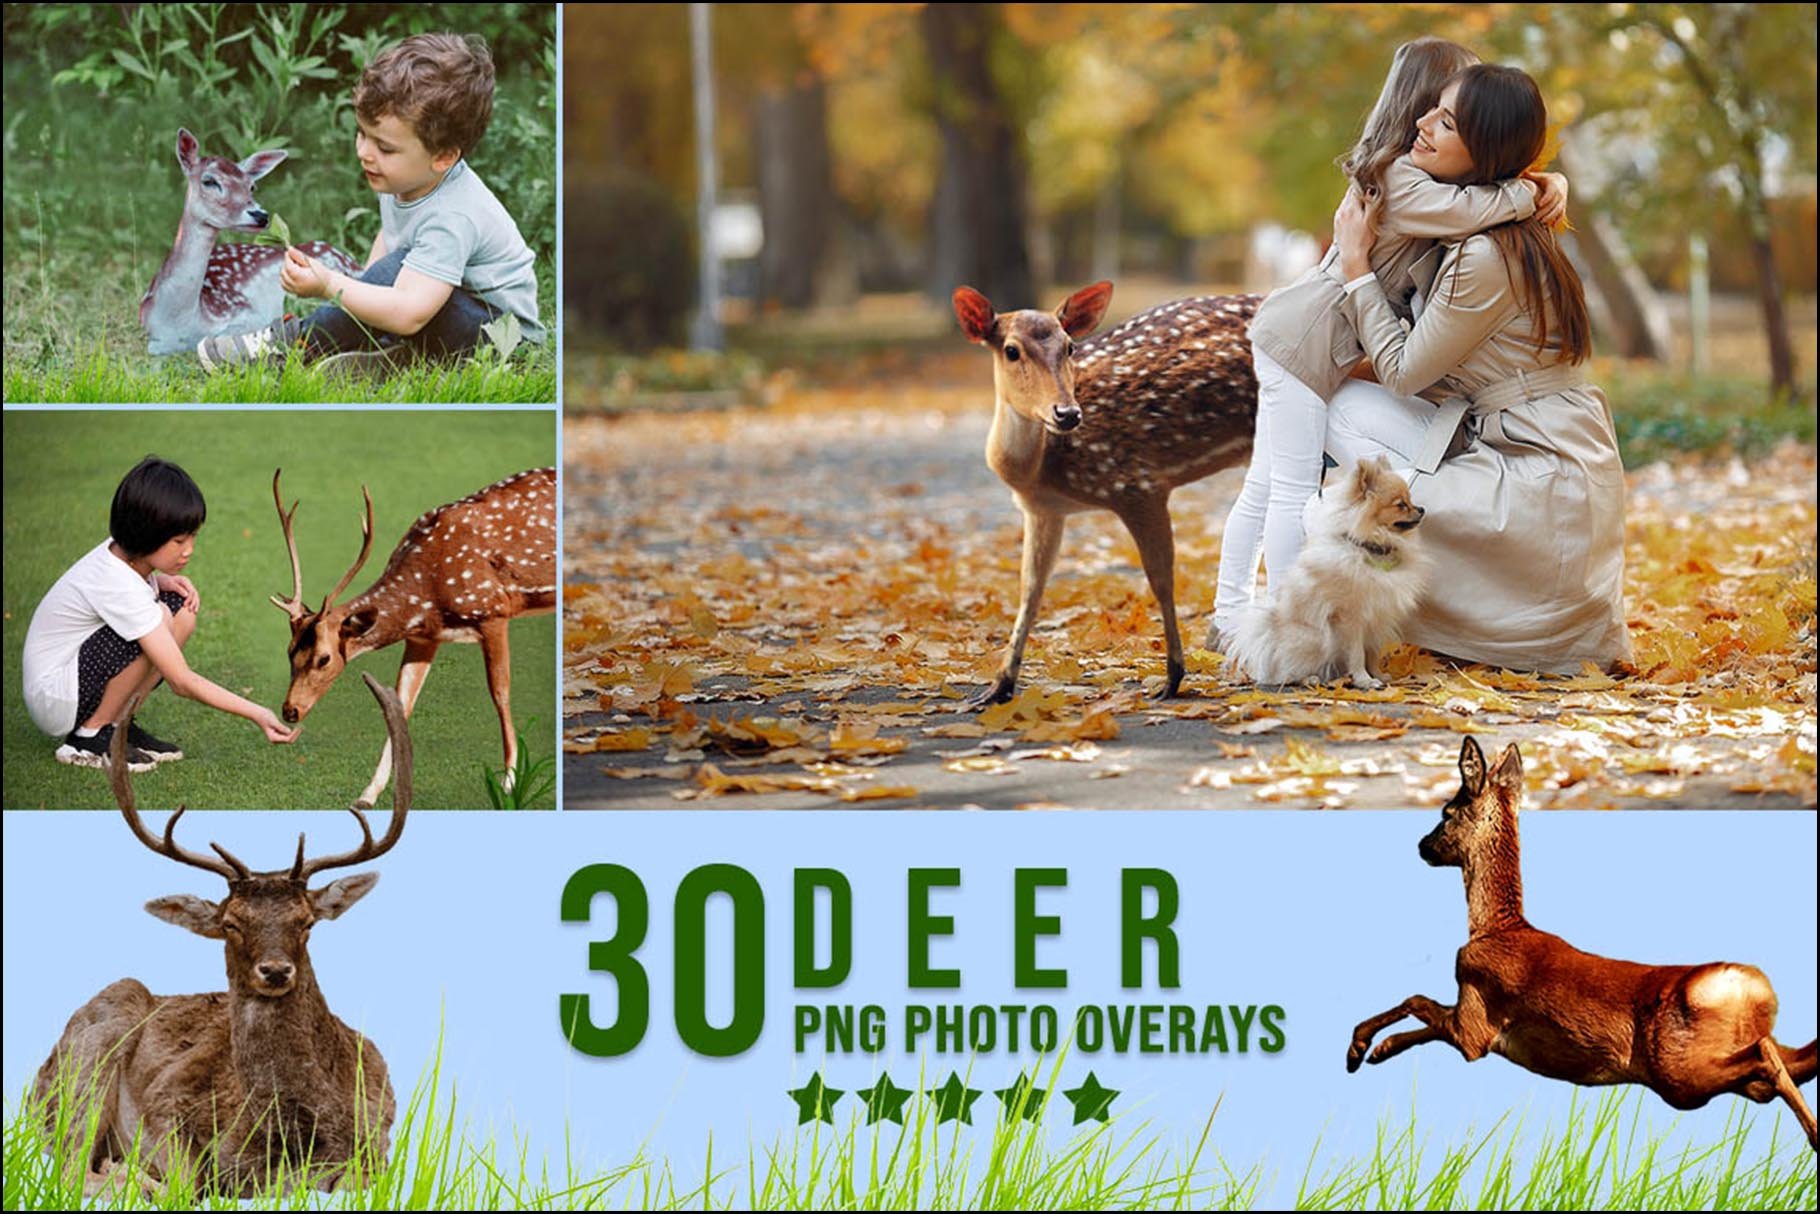 30 Deer Photoshop Overlayscover image.